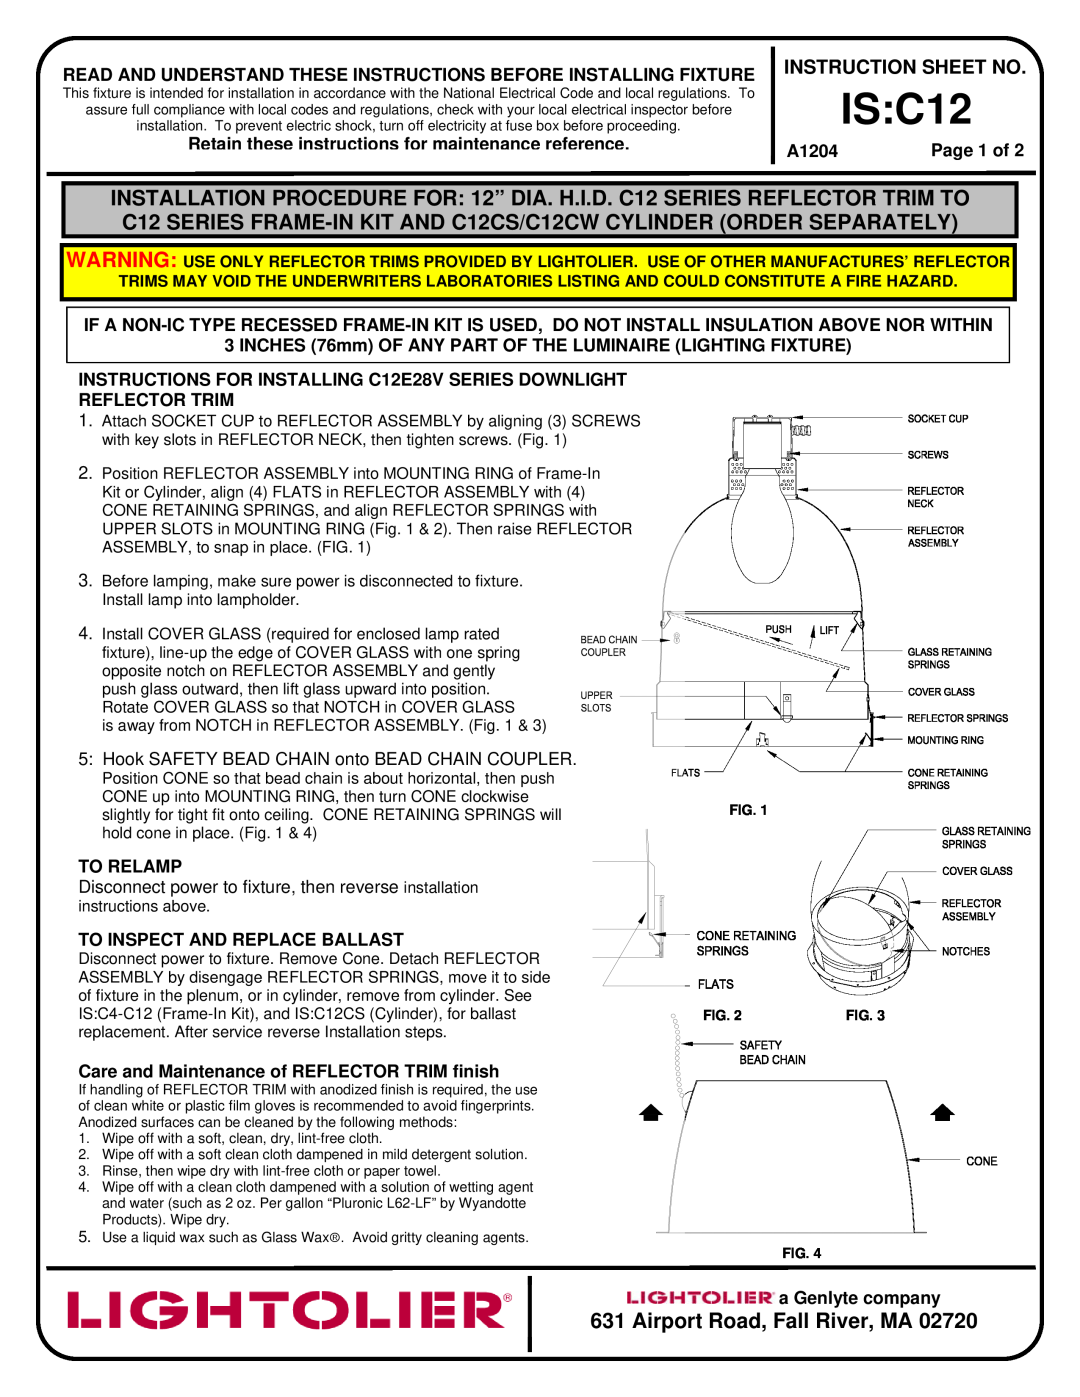 Lightolier instruction sheet IS C12, Airport Road, Fall River, MA, Instruction Sheet No 